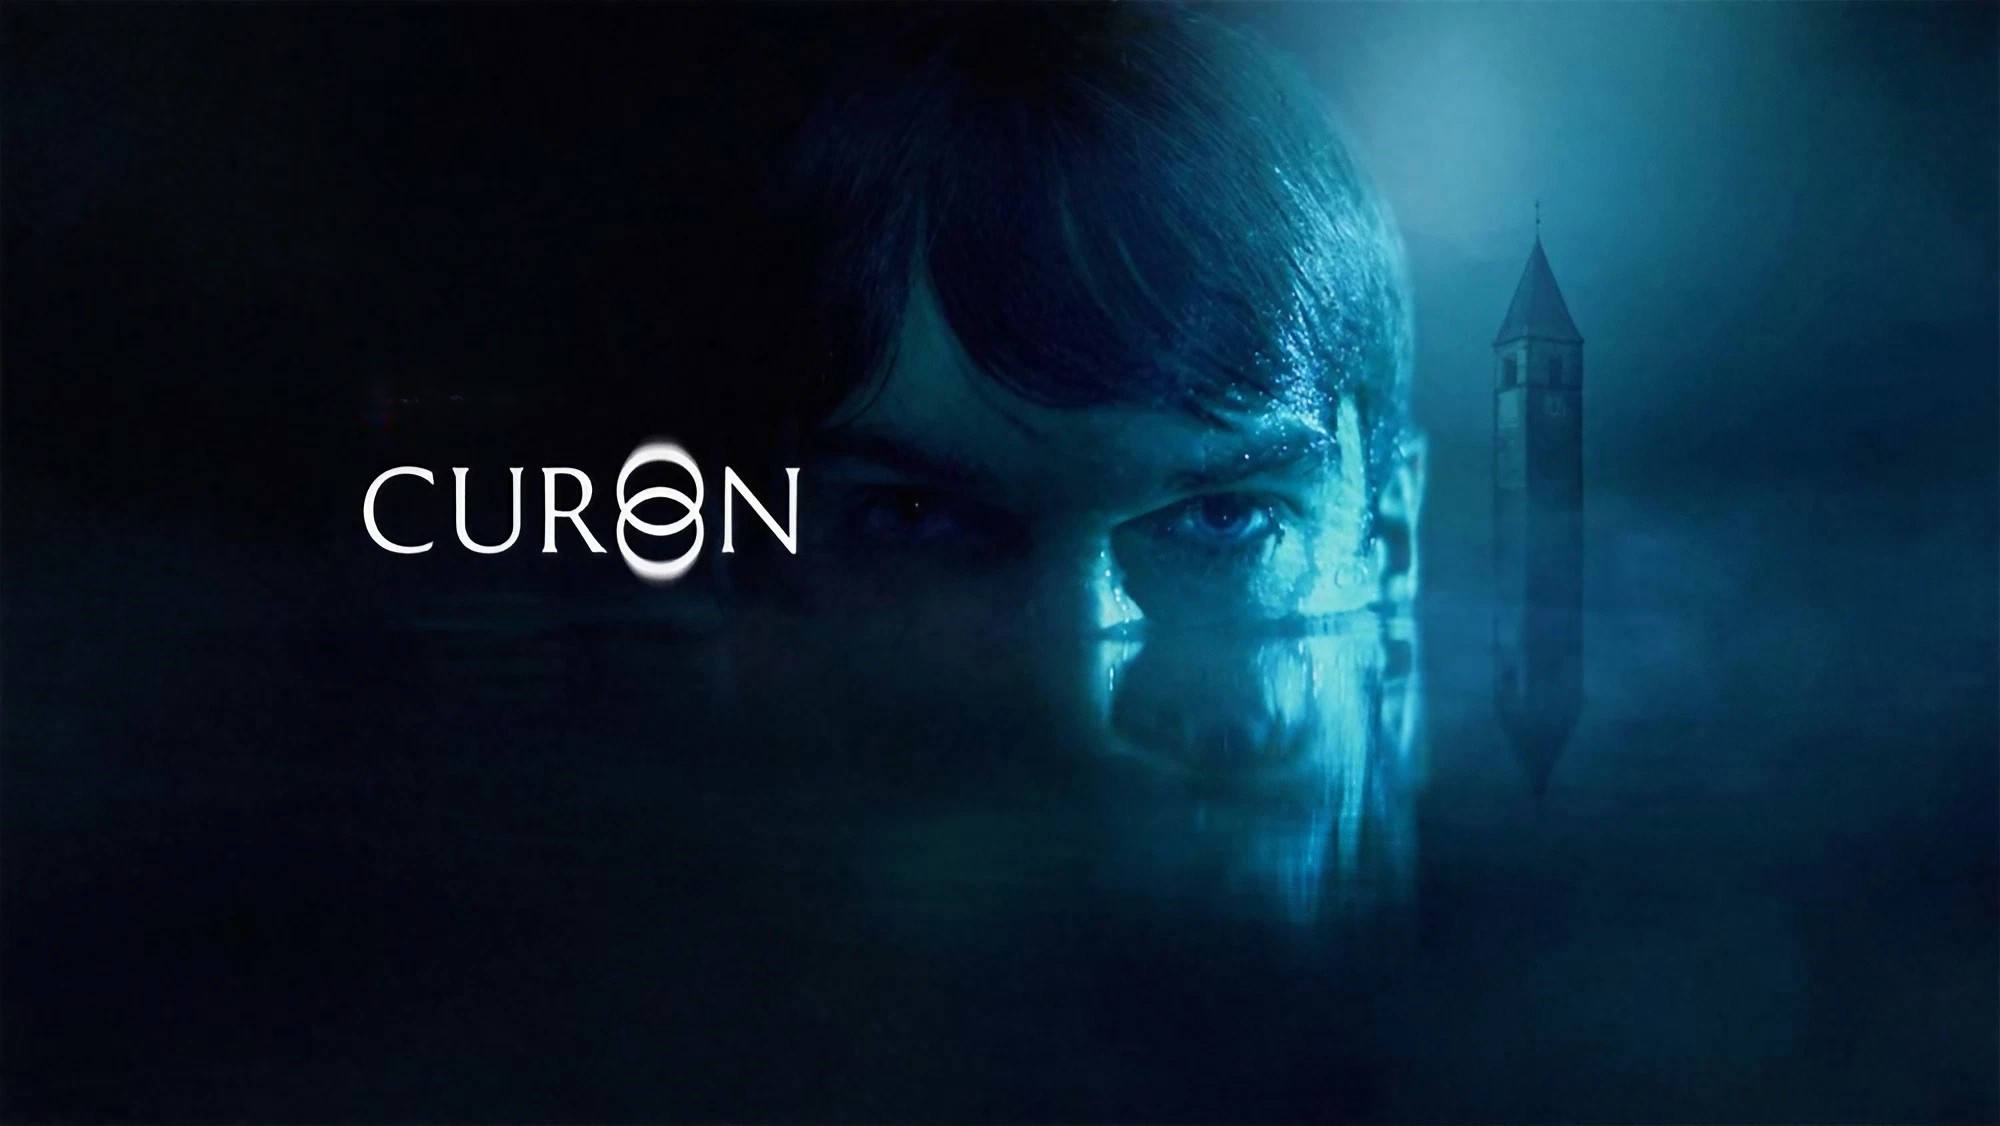 Curon Season 2 release date